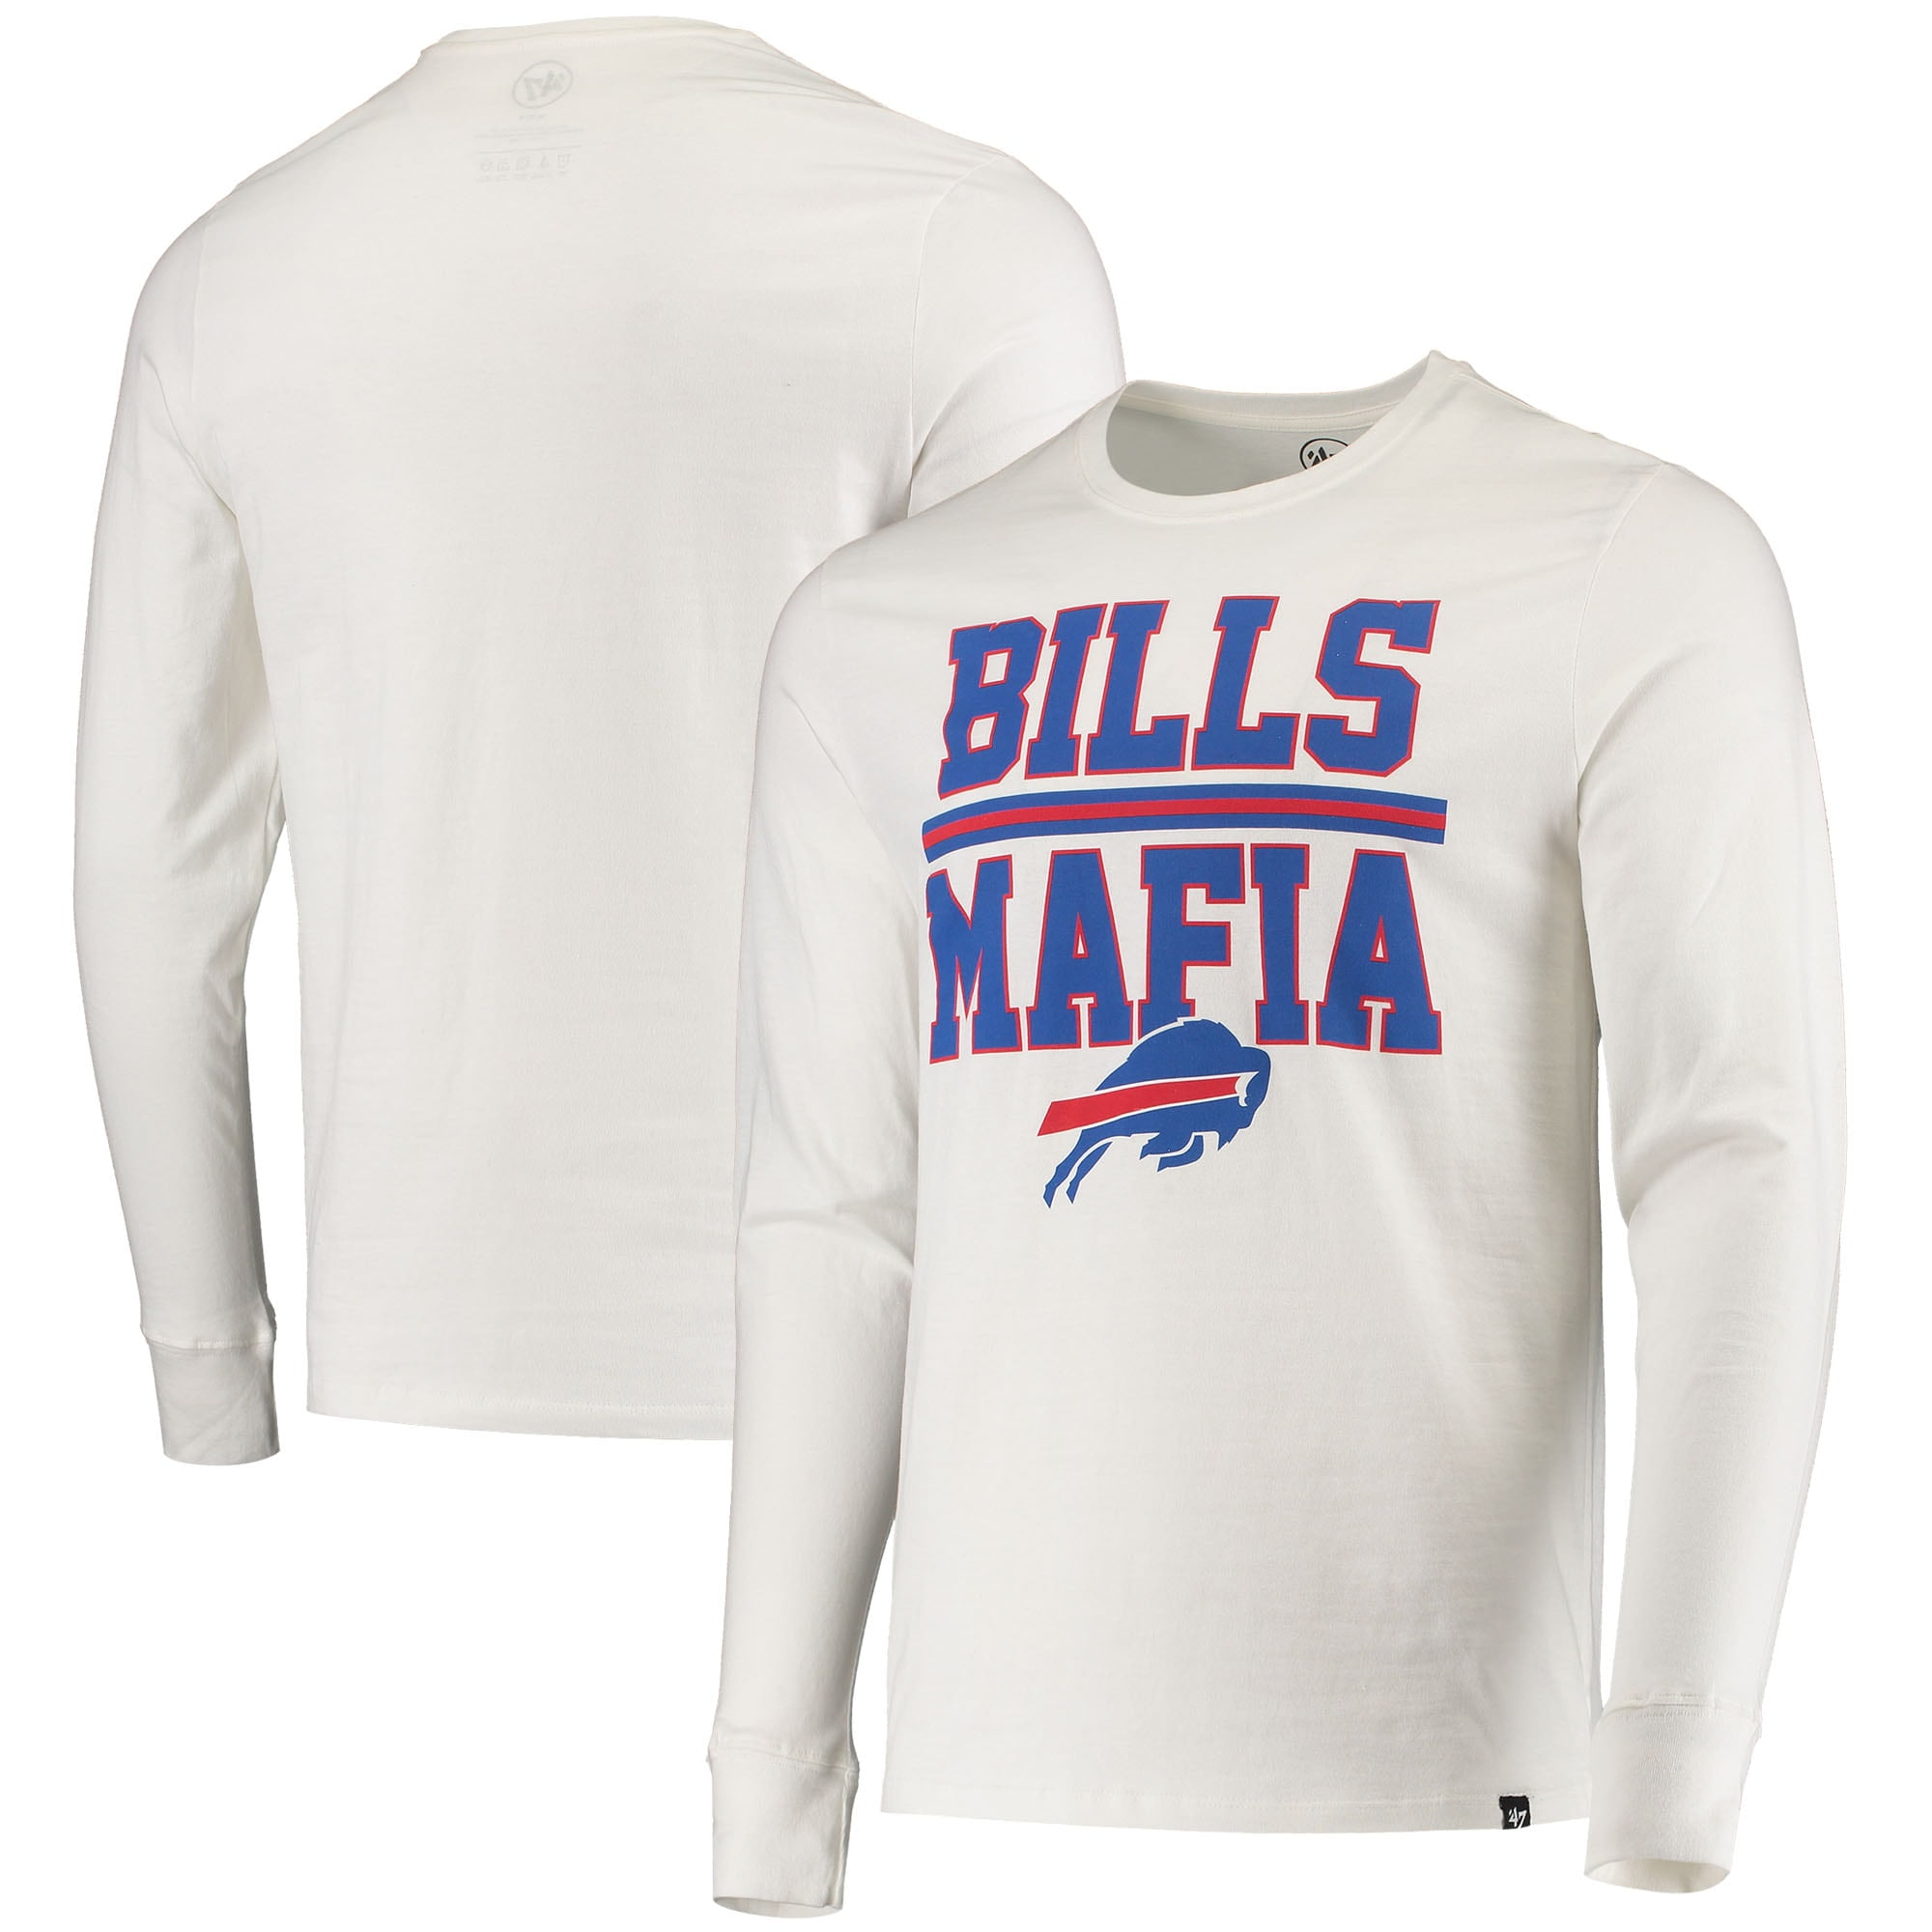 Bills Mafia Bleach Shirt